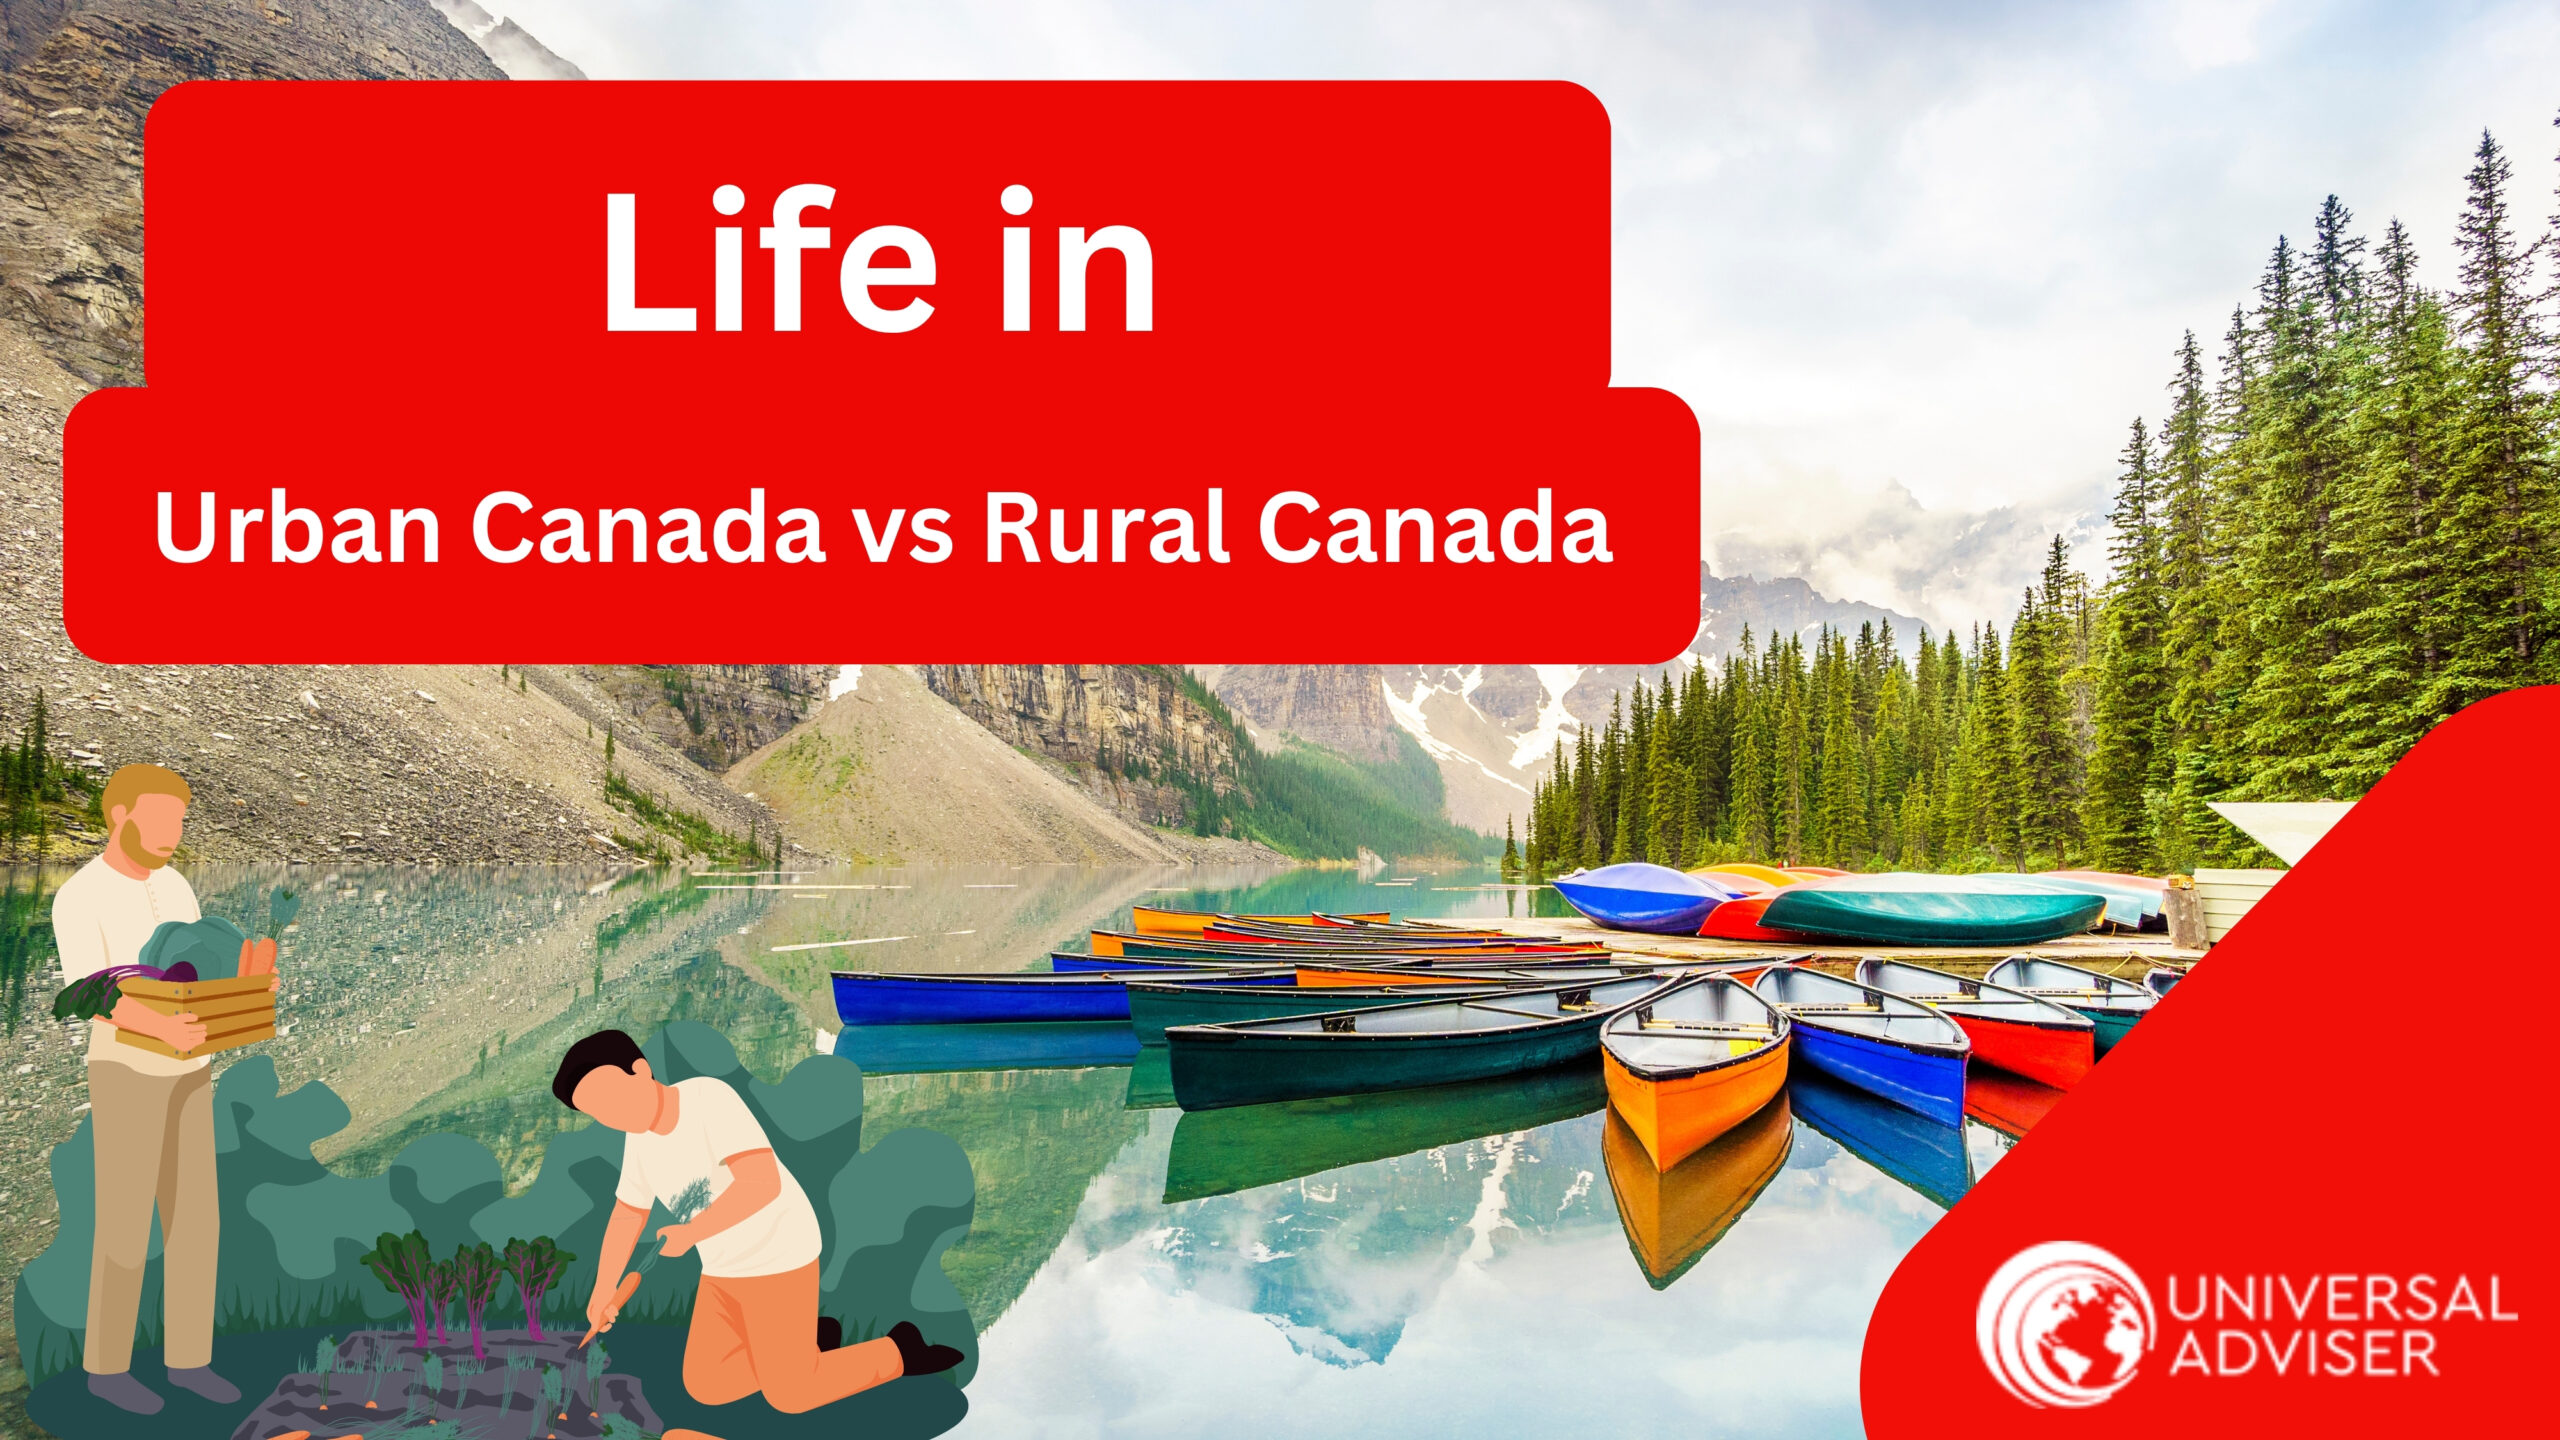 How’s Life in Urban Canada vs Rural Canada